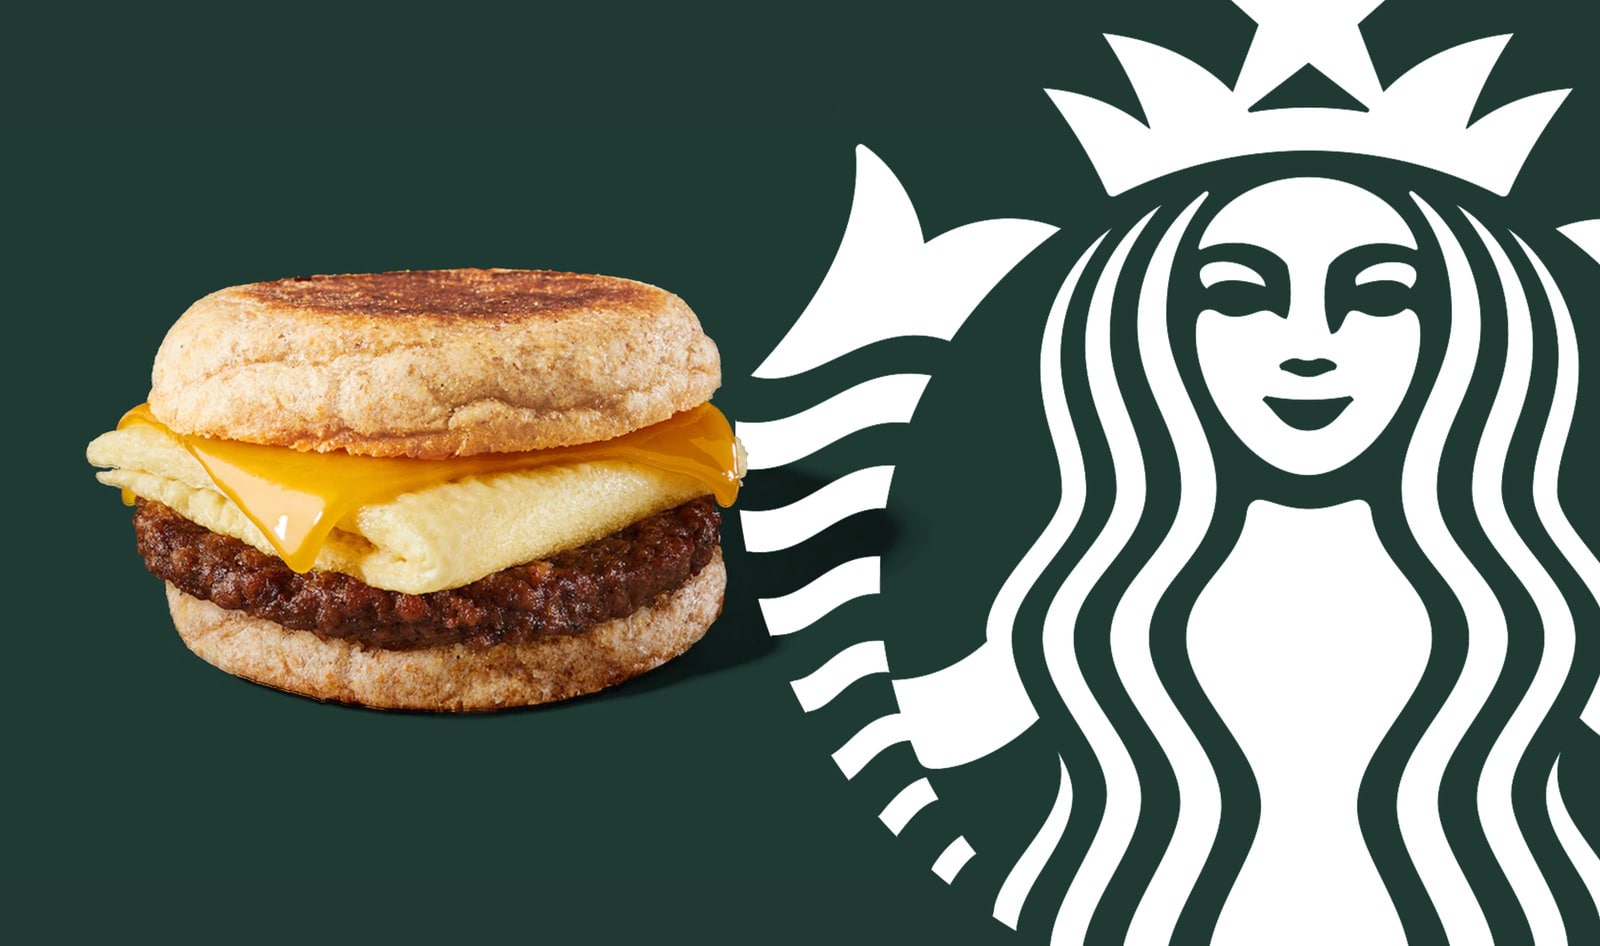 Starbucks Vegan Breakfast Sandwiches Spotted in Dallas